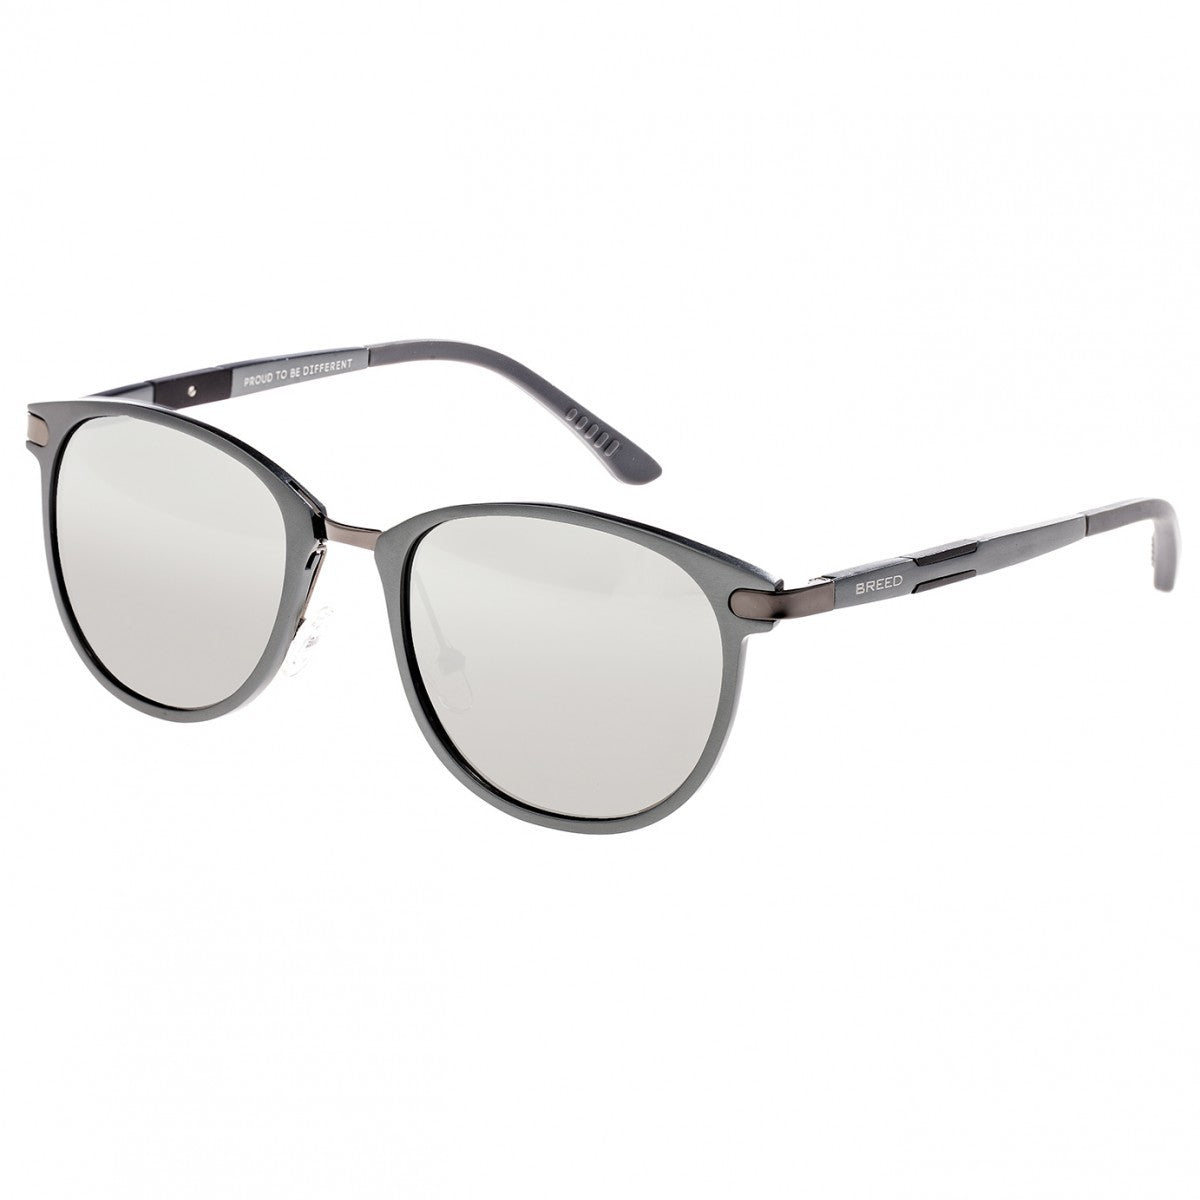 Breed Orion Aluminium Polarized Sunglasses - Gunmetal/Silver - BSG020GM